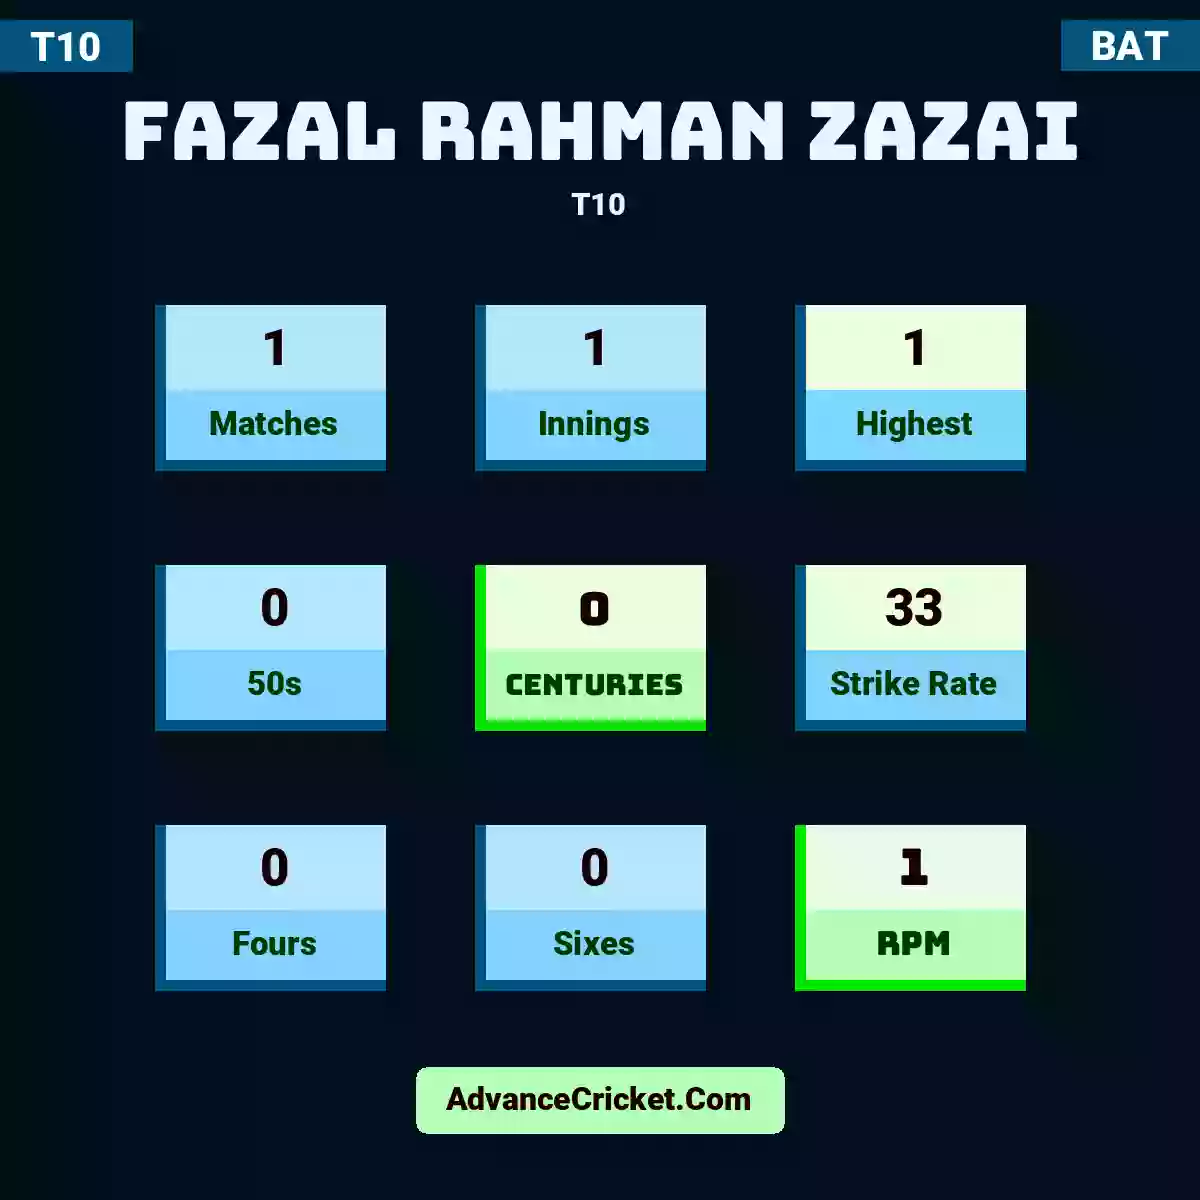 Fazal Rahman Zazai T10 , Fazal Rahman Zazai played 1 matches, scored 1 runs as highest, 0 half-centuries, and 0 centuries, with a strike rate of 33. F.Zazai hit 0 fours and 0 sixes, with an RPM of 1.